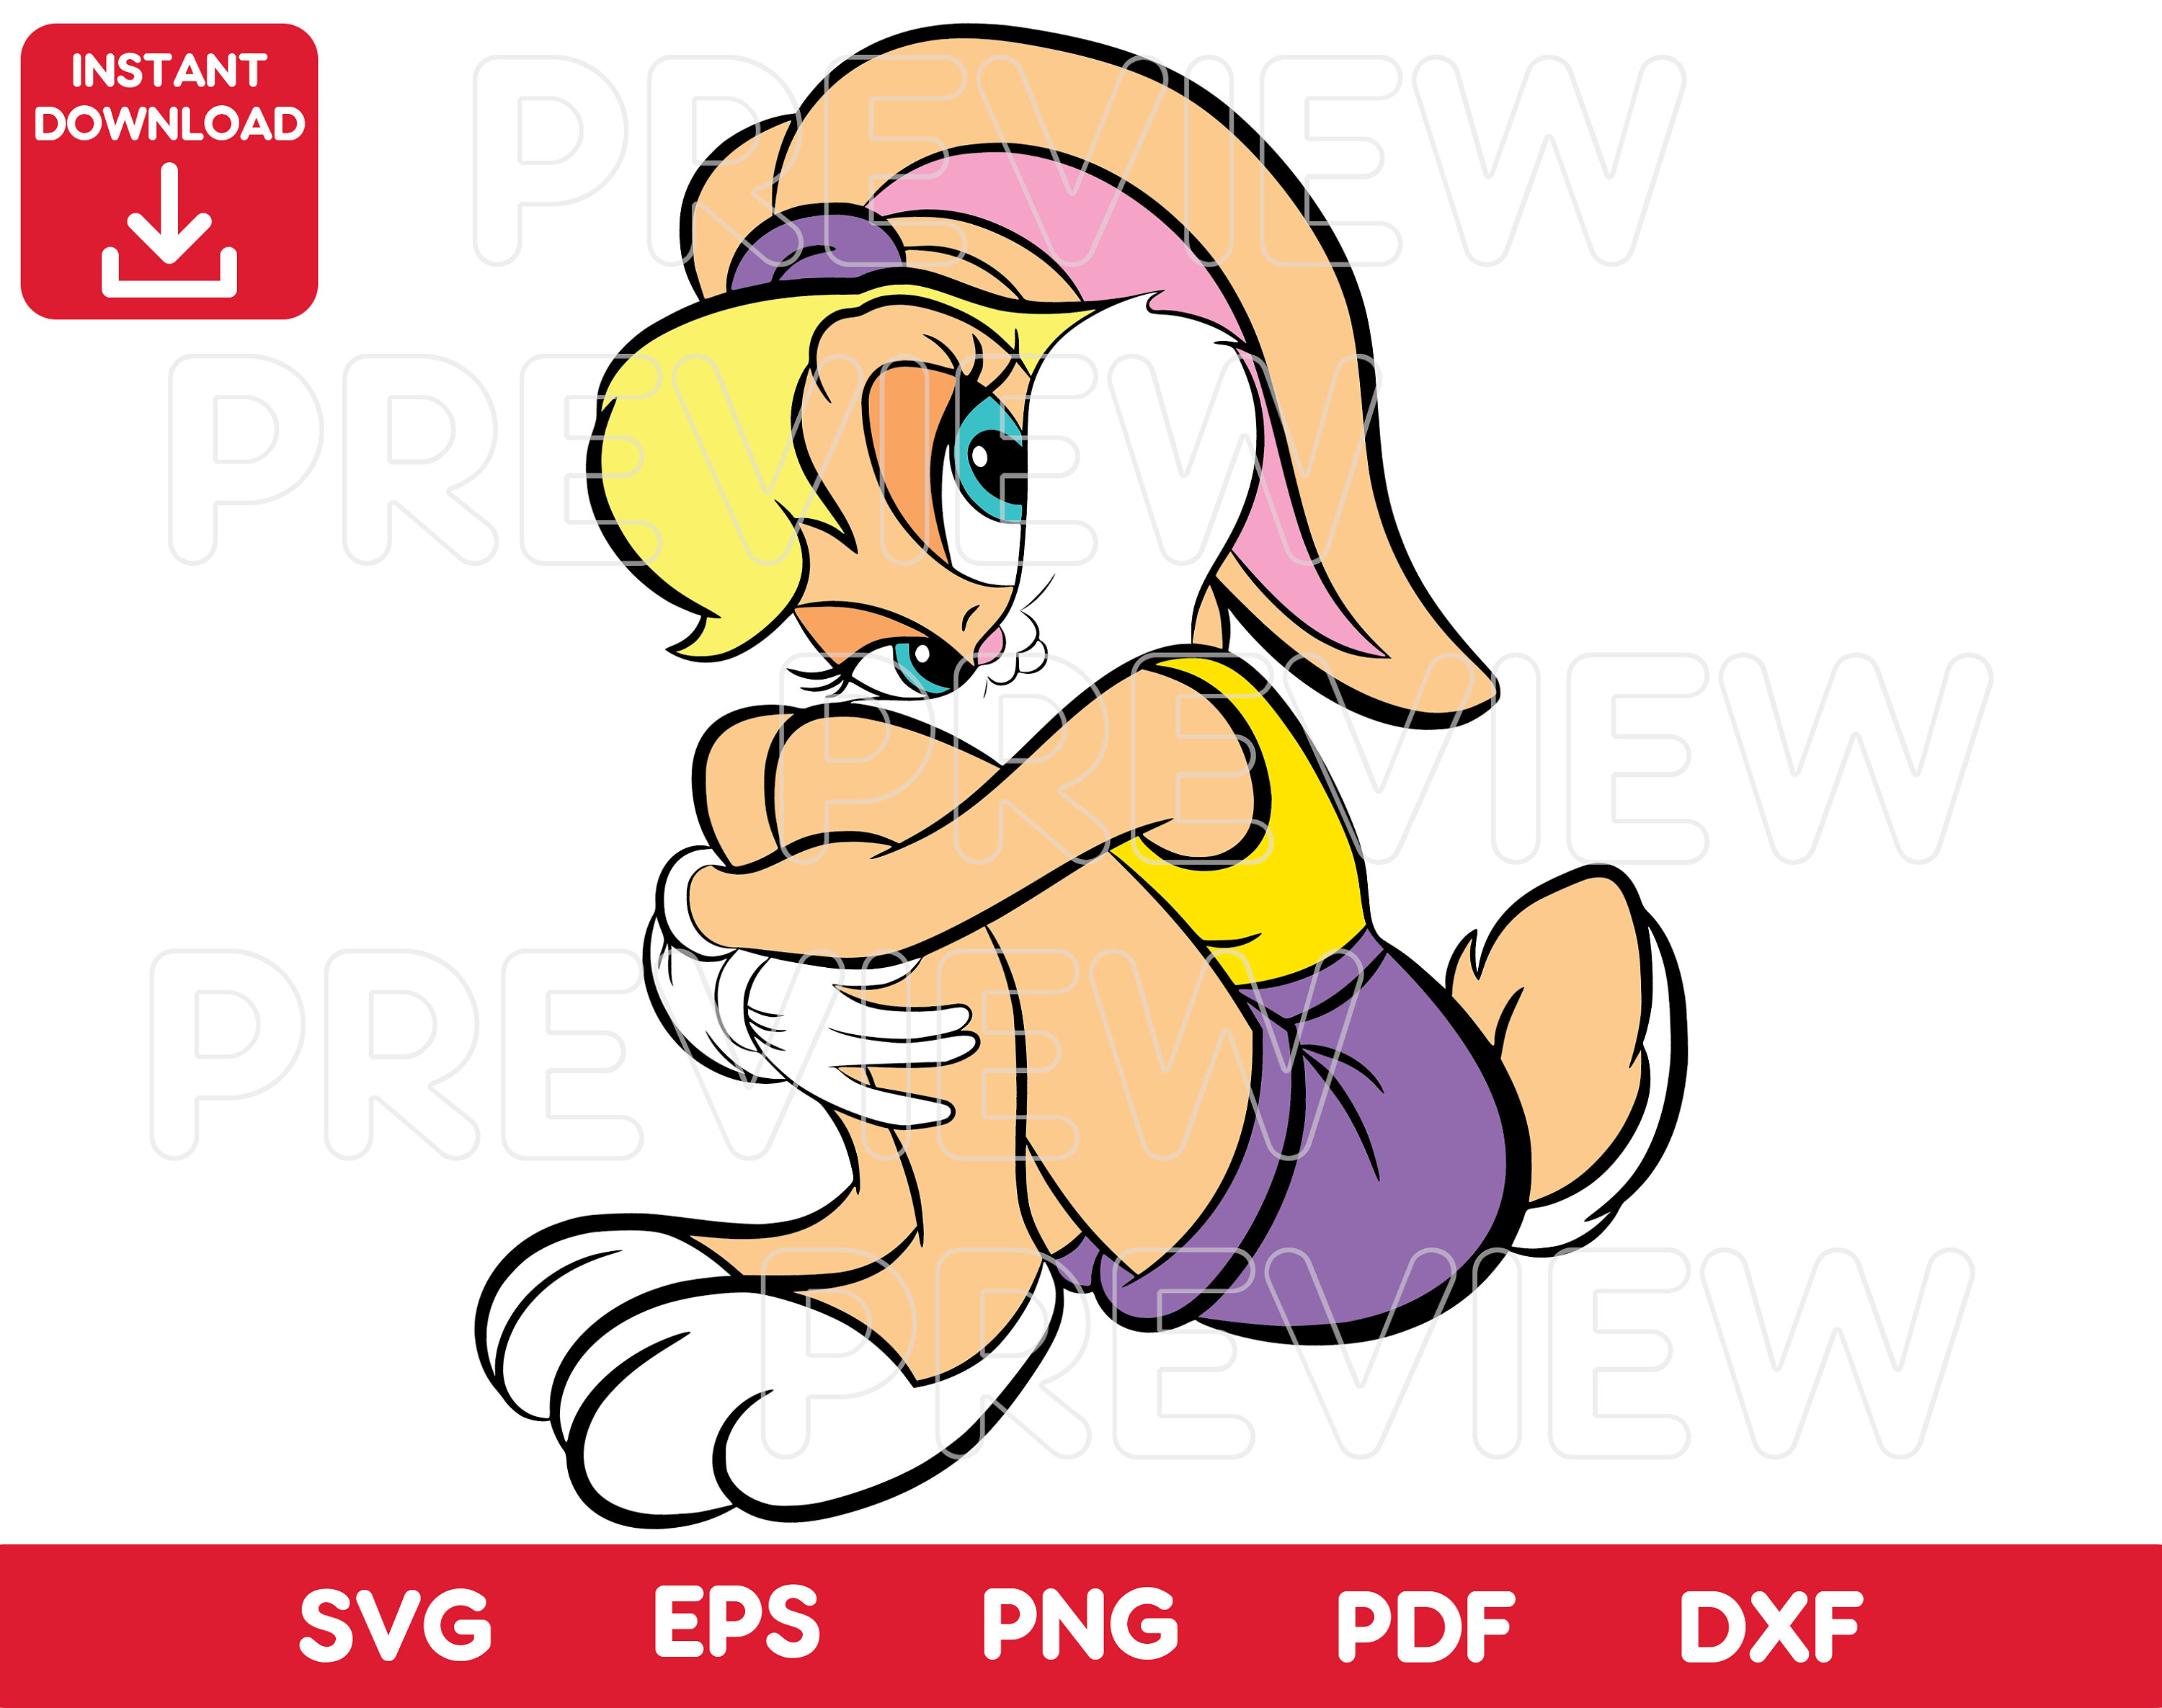 Lola Bunny in Svg Png Dxf Eps Pdf format | Etsy